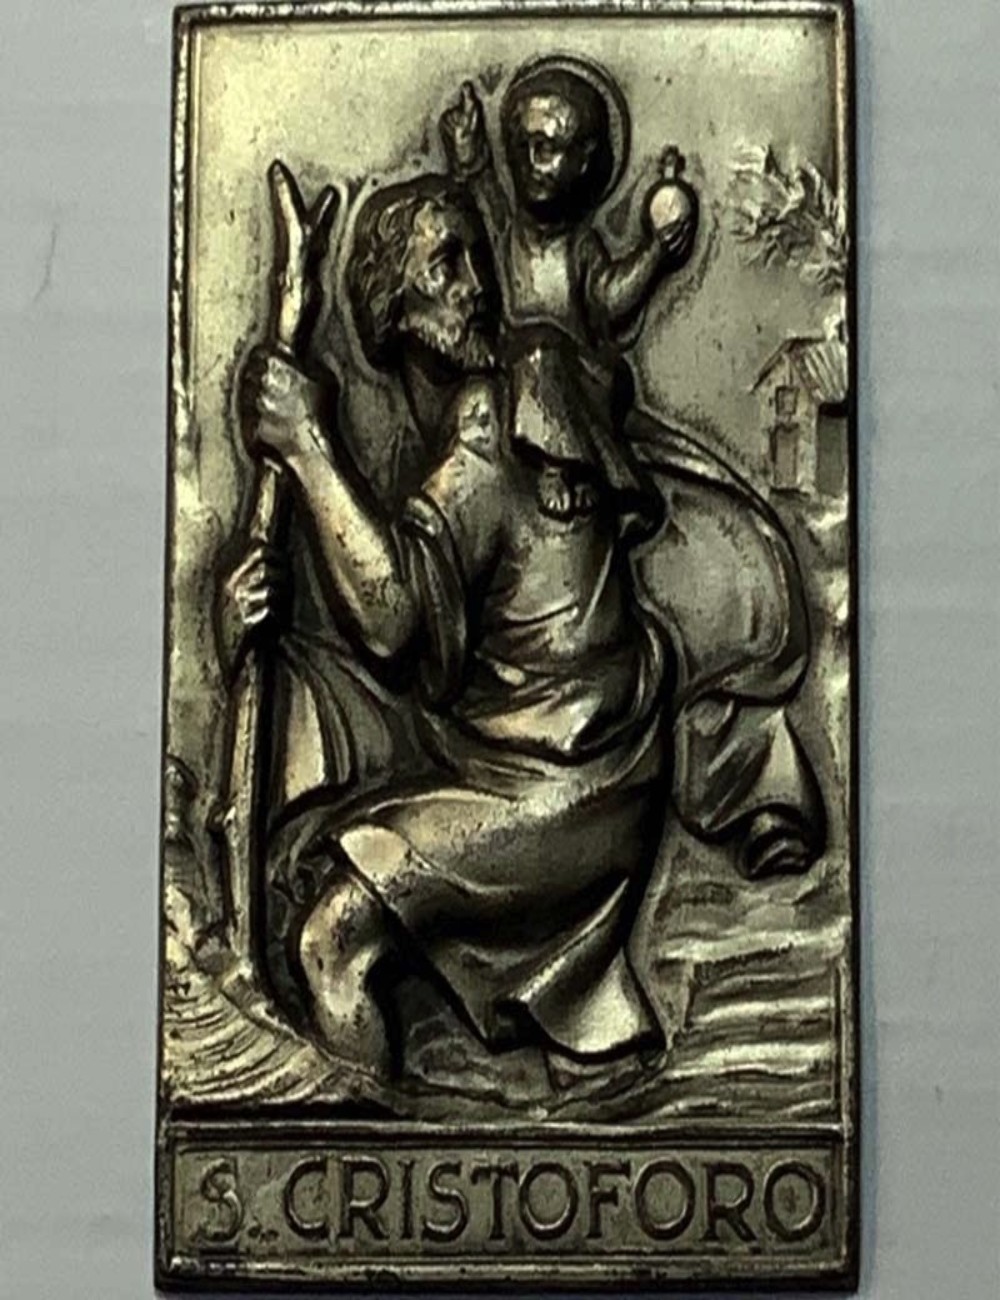 San Cristoforo plaque. Dimensions 5.7 cm x 3.9 cm